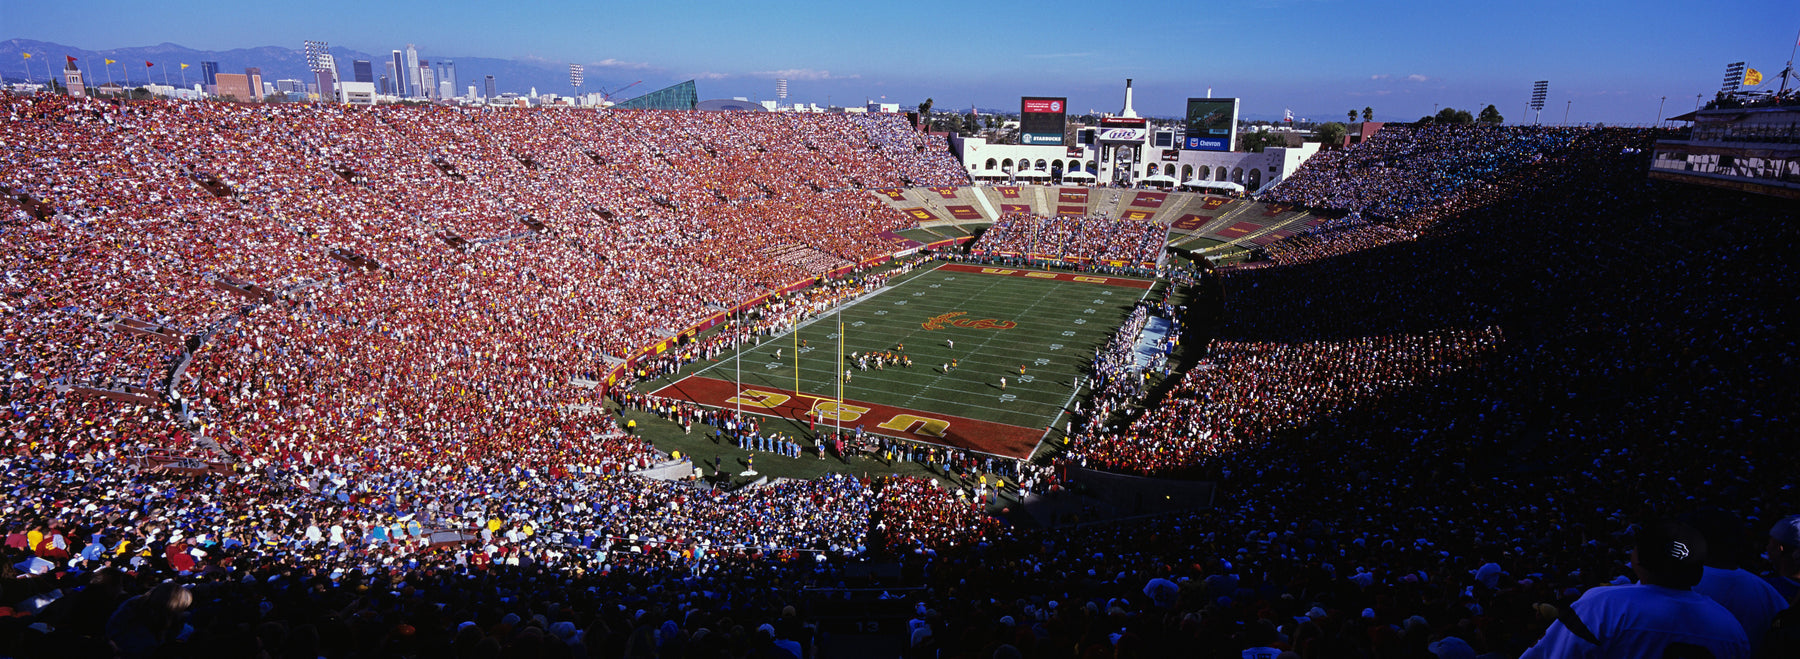 USC vs UCLA - Los Angeles Coliseum (During Game)